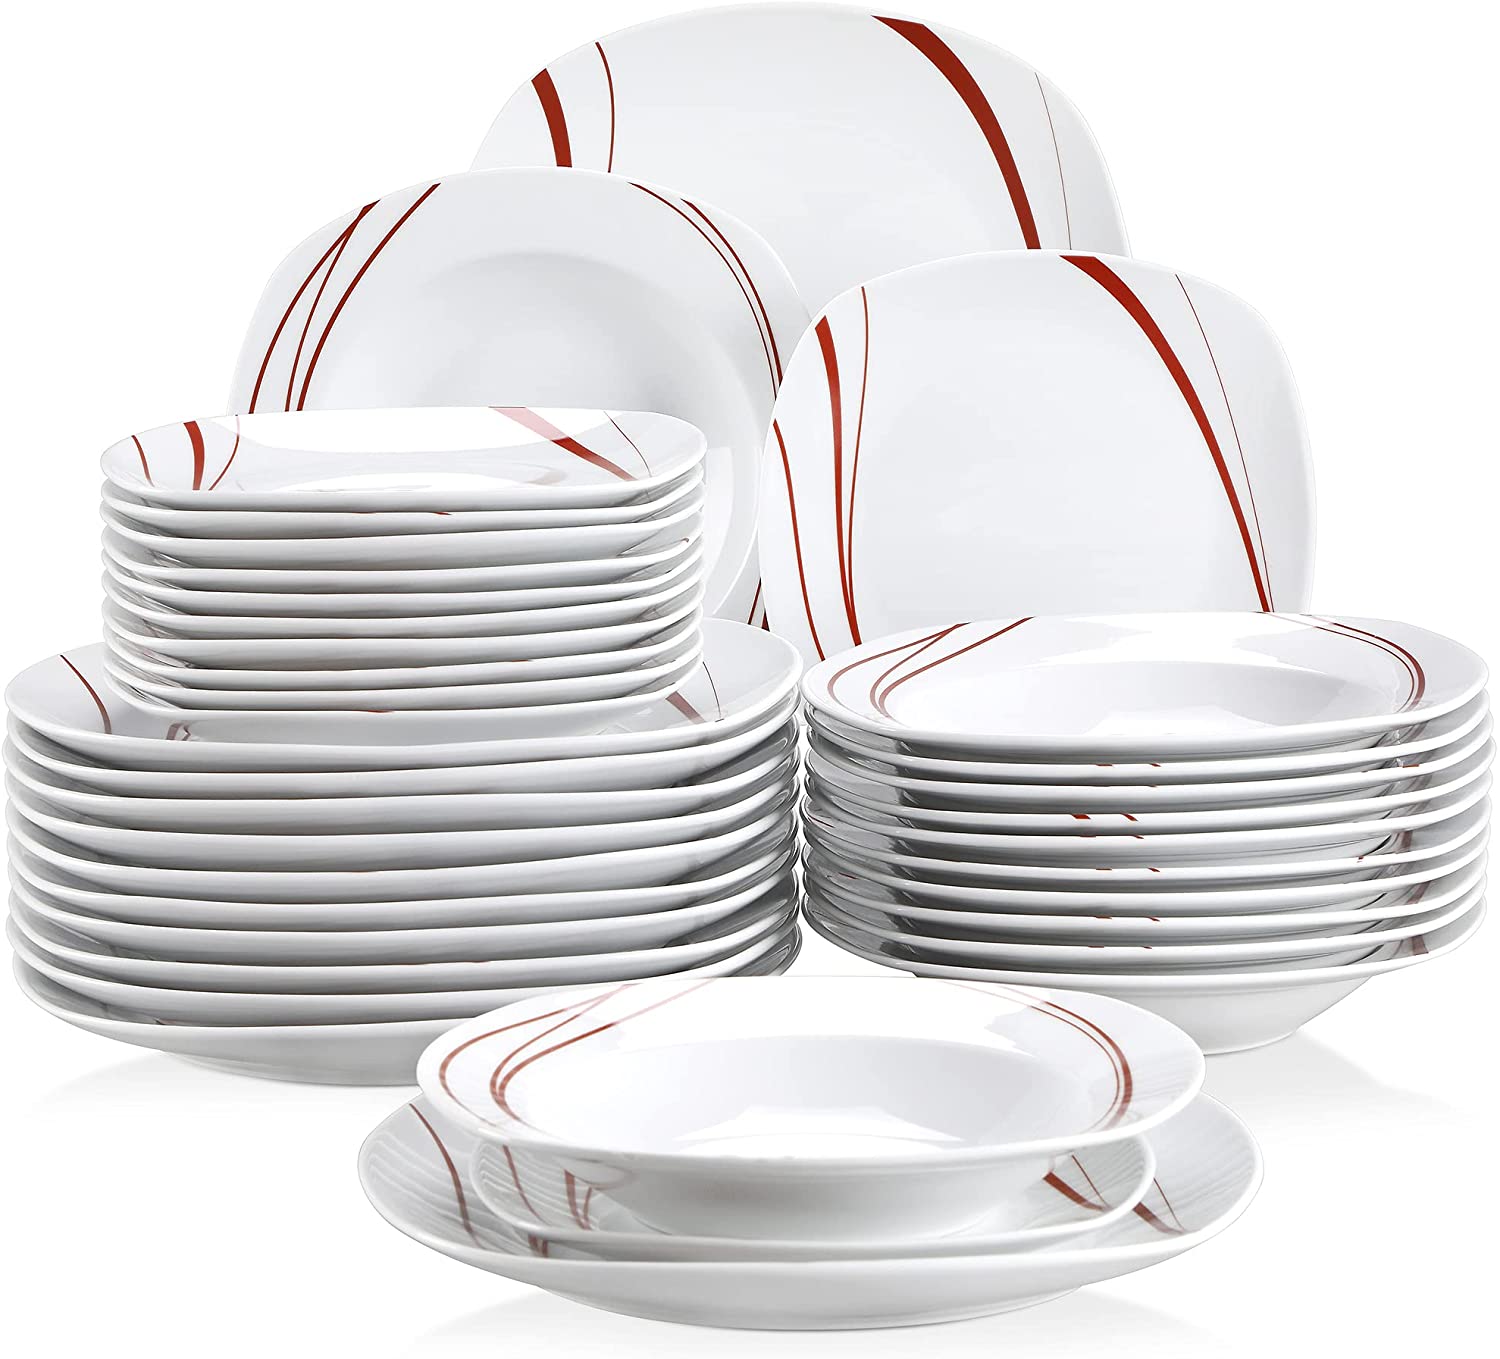 Veweet Bonnie Series Porcelain Dinner Set, 60 Pieces for 12 People